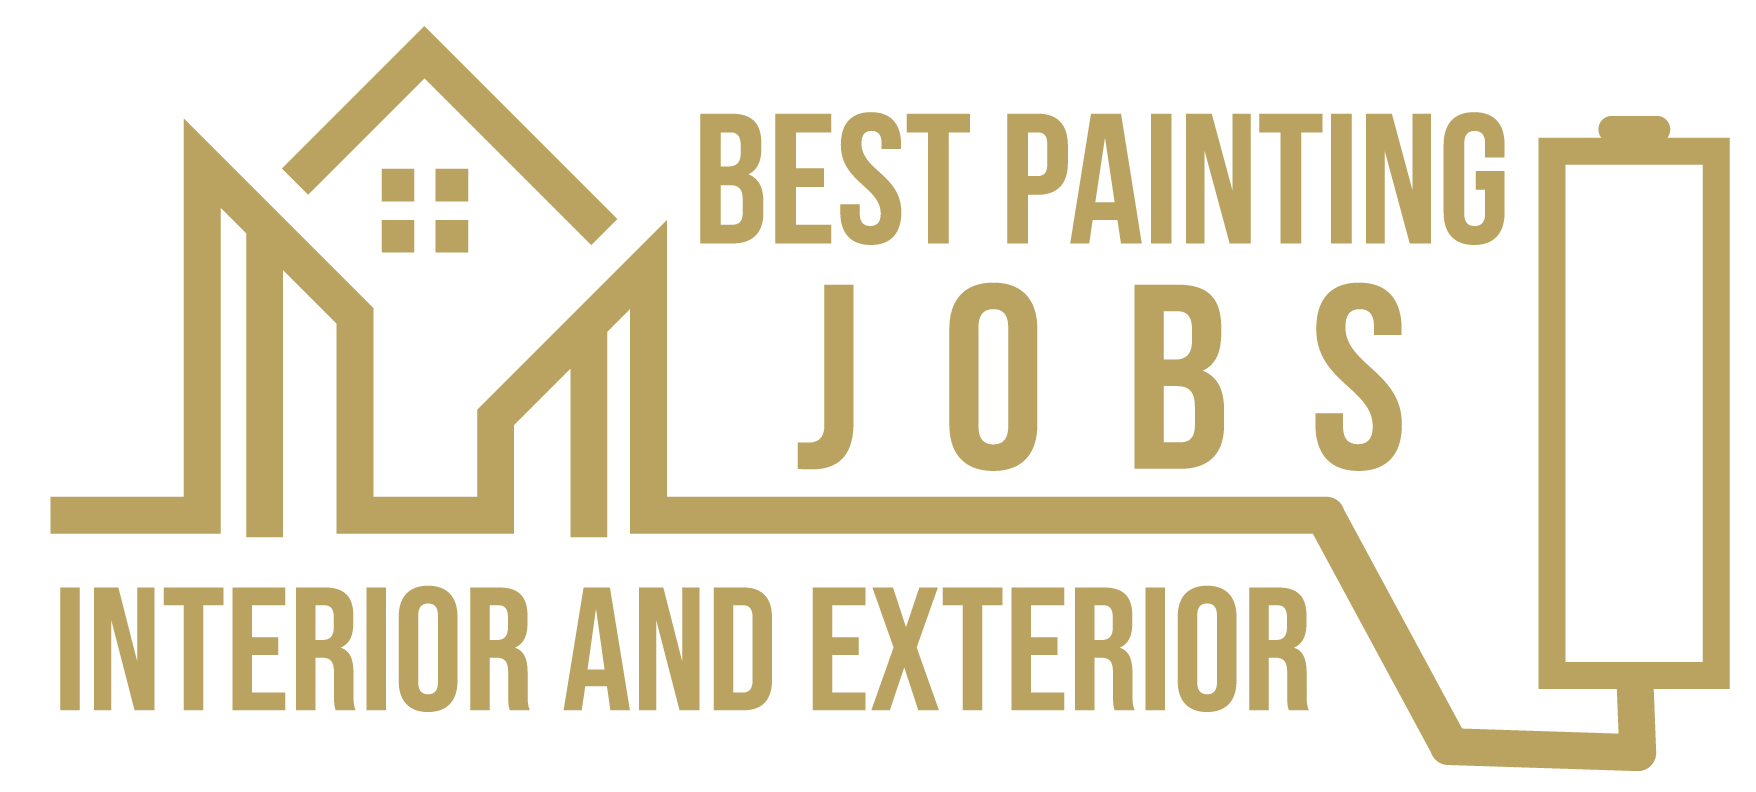 Best Painting Jobs